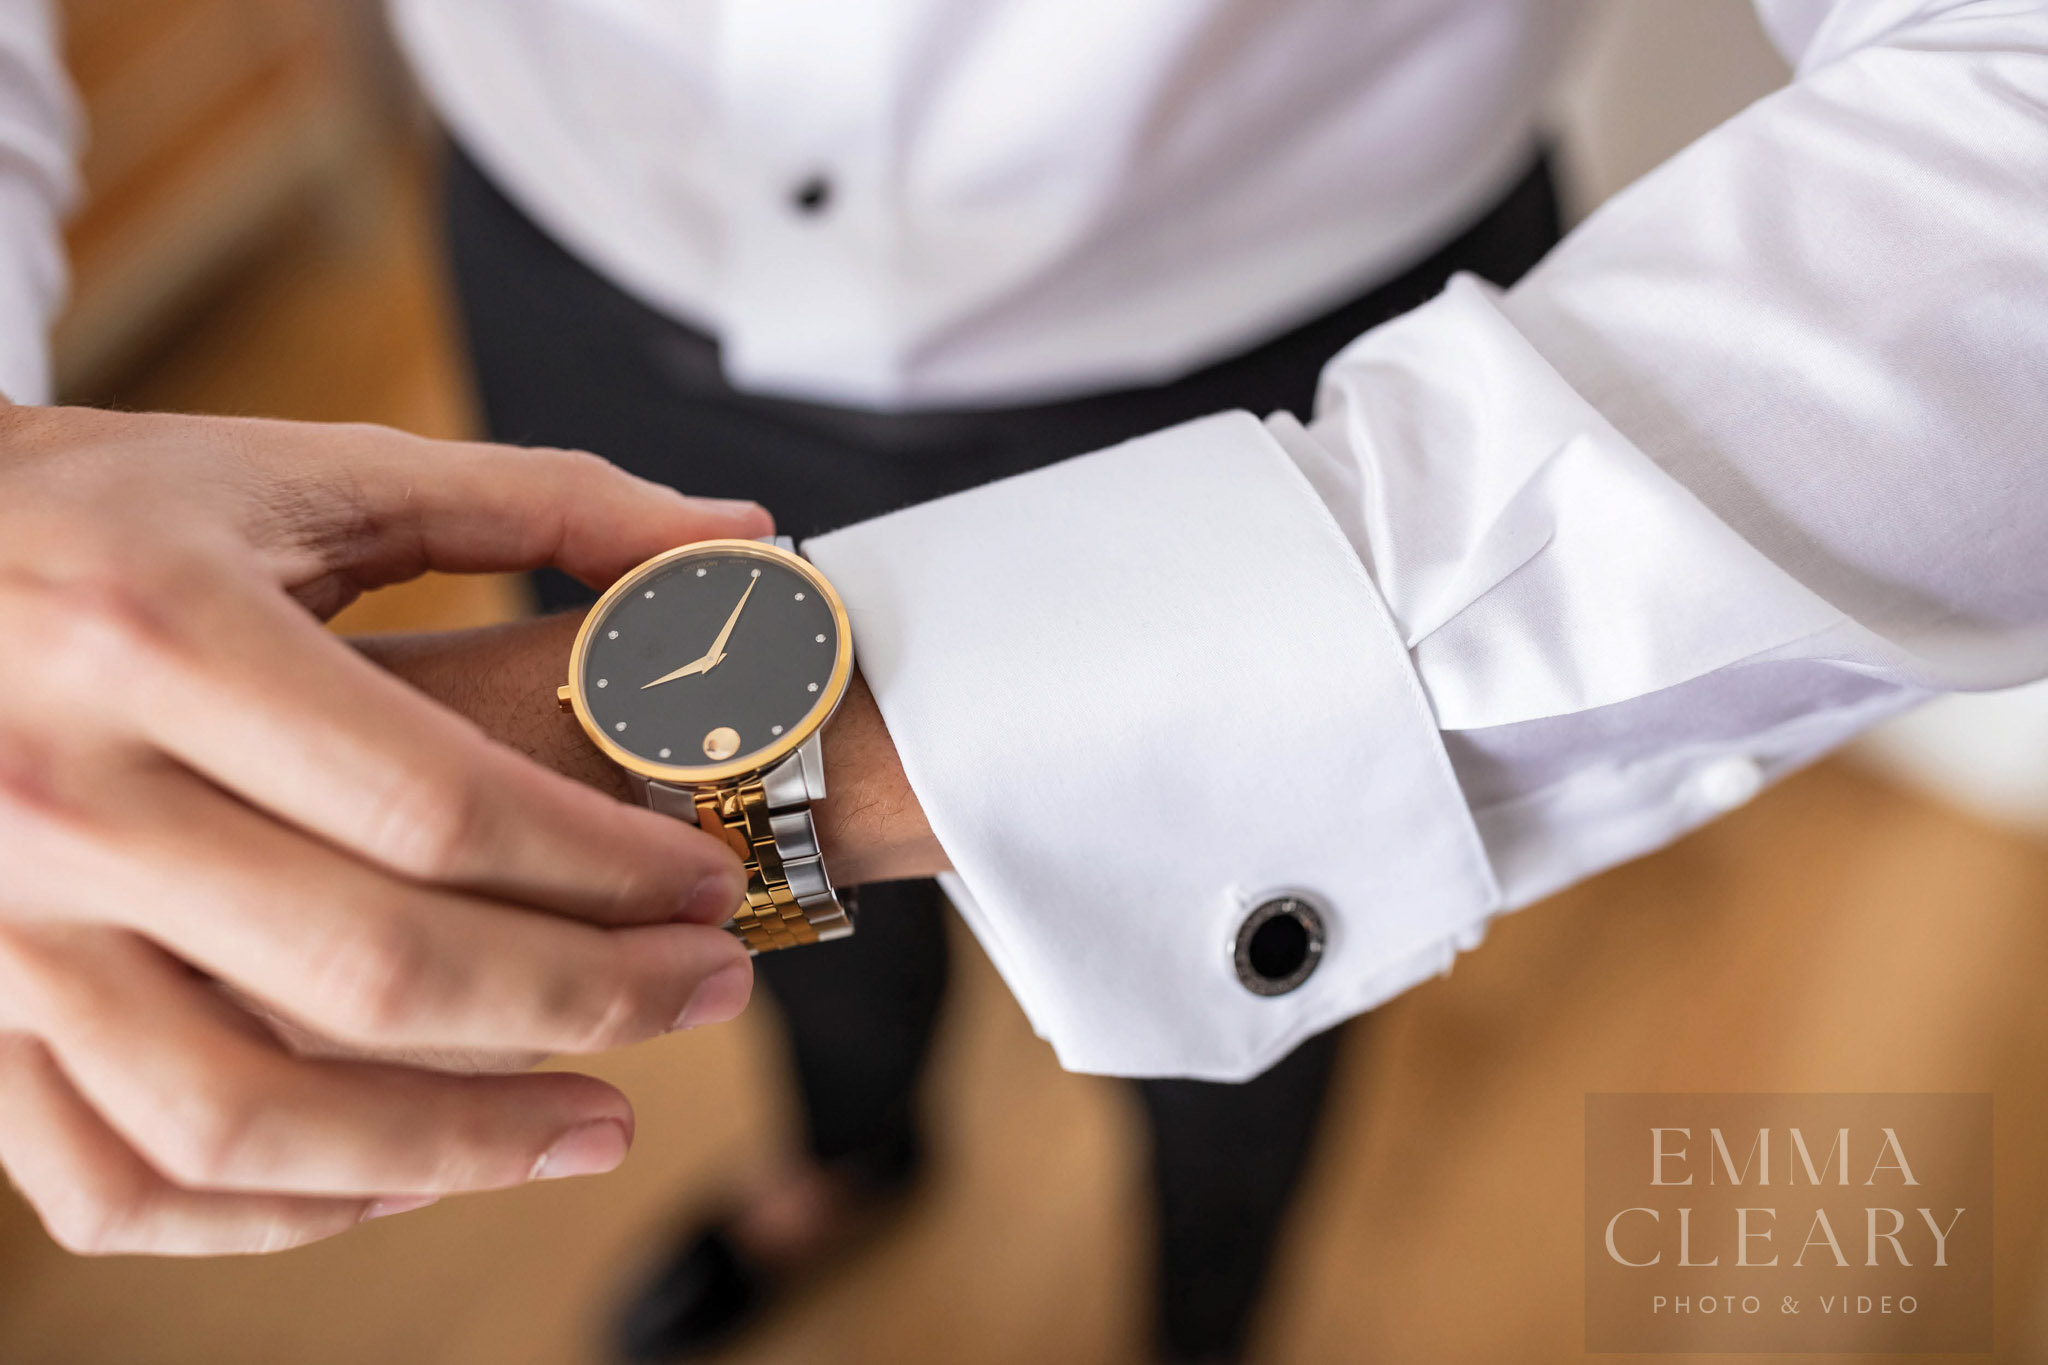 The groom's watch